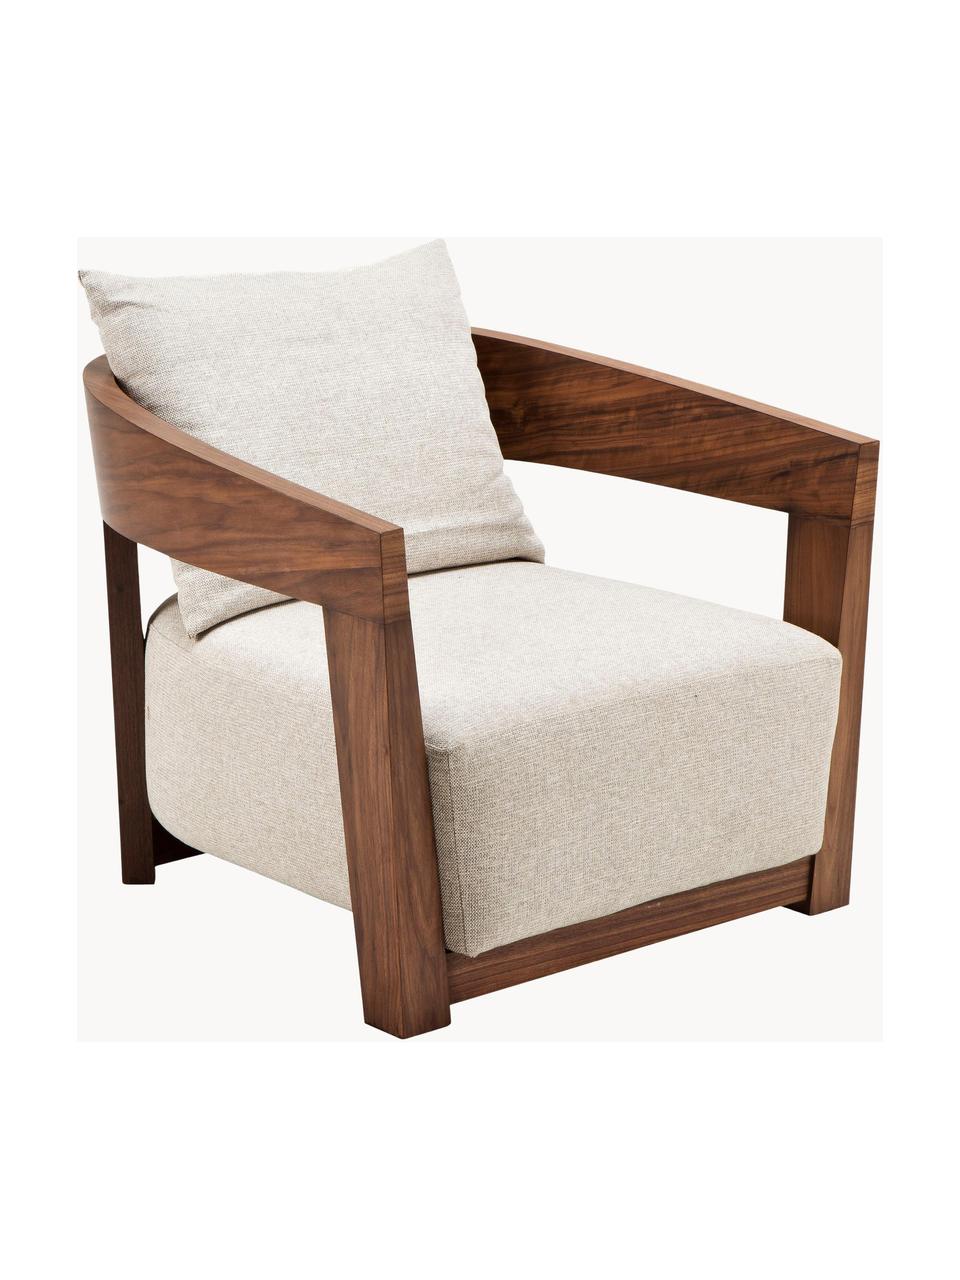 Handgemaakte houten loungestoel Rubautelli, Bekleding: 58% polyester, 42% olefin, Frame: MDF, walnootfineer, Geweven stof lichtbeige, hout, B 74 x D 80 cm